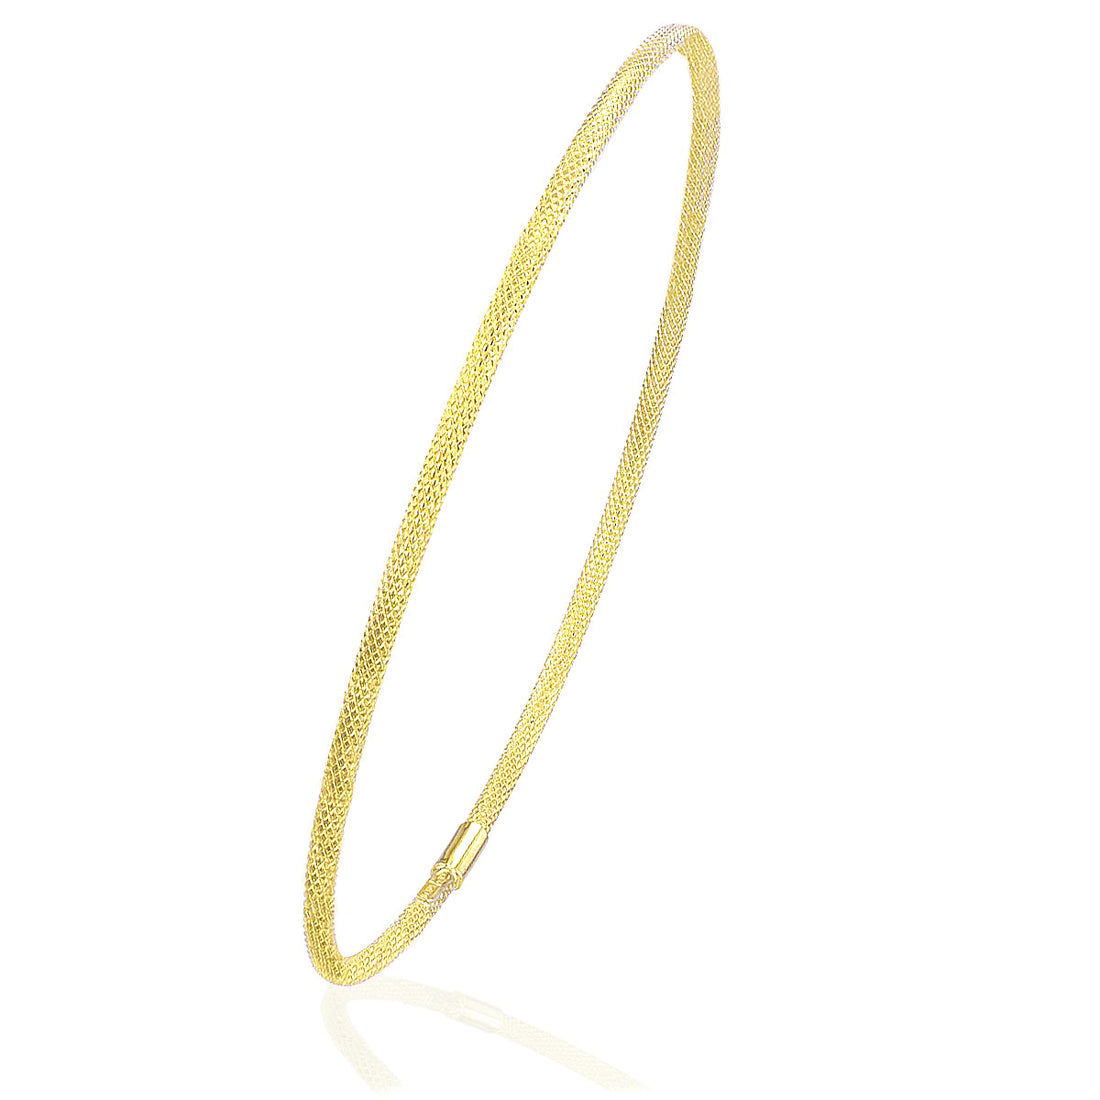 9ct Yellow Gold, Diamond Cut Textured Bangle of 6.5cm Diameter